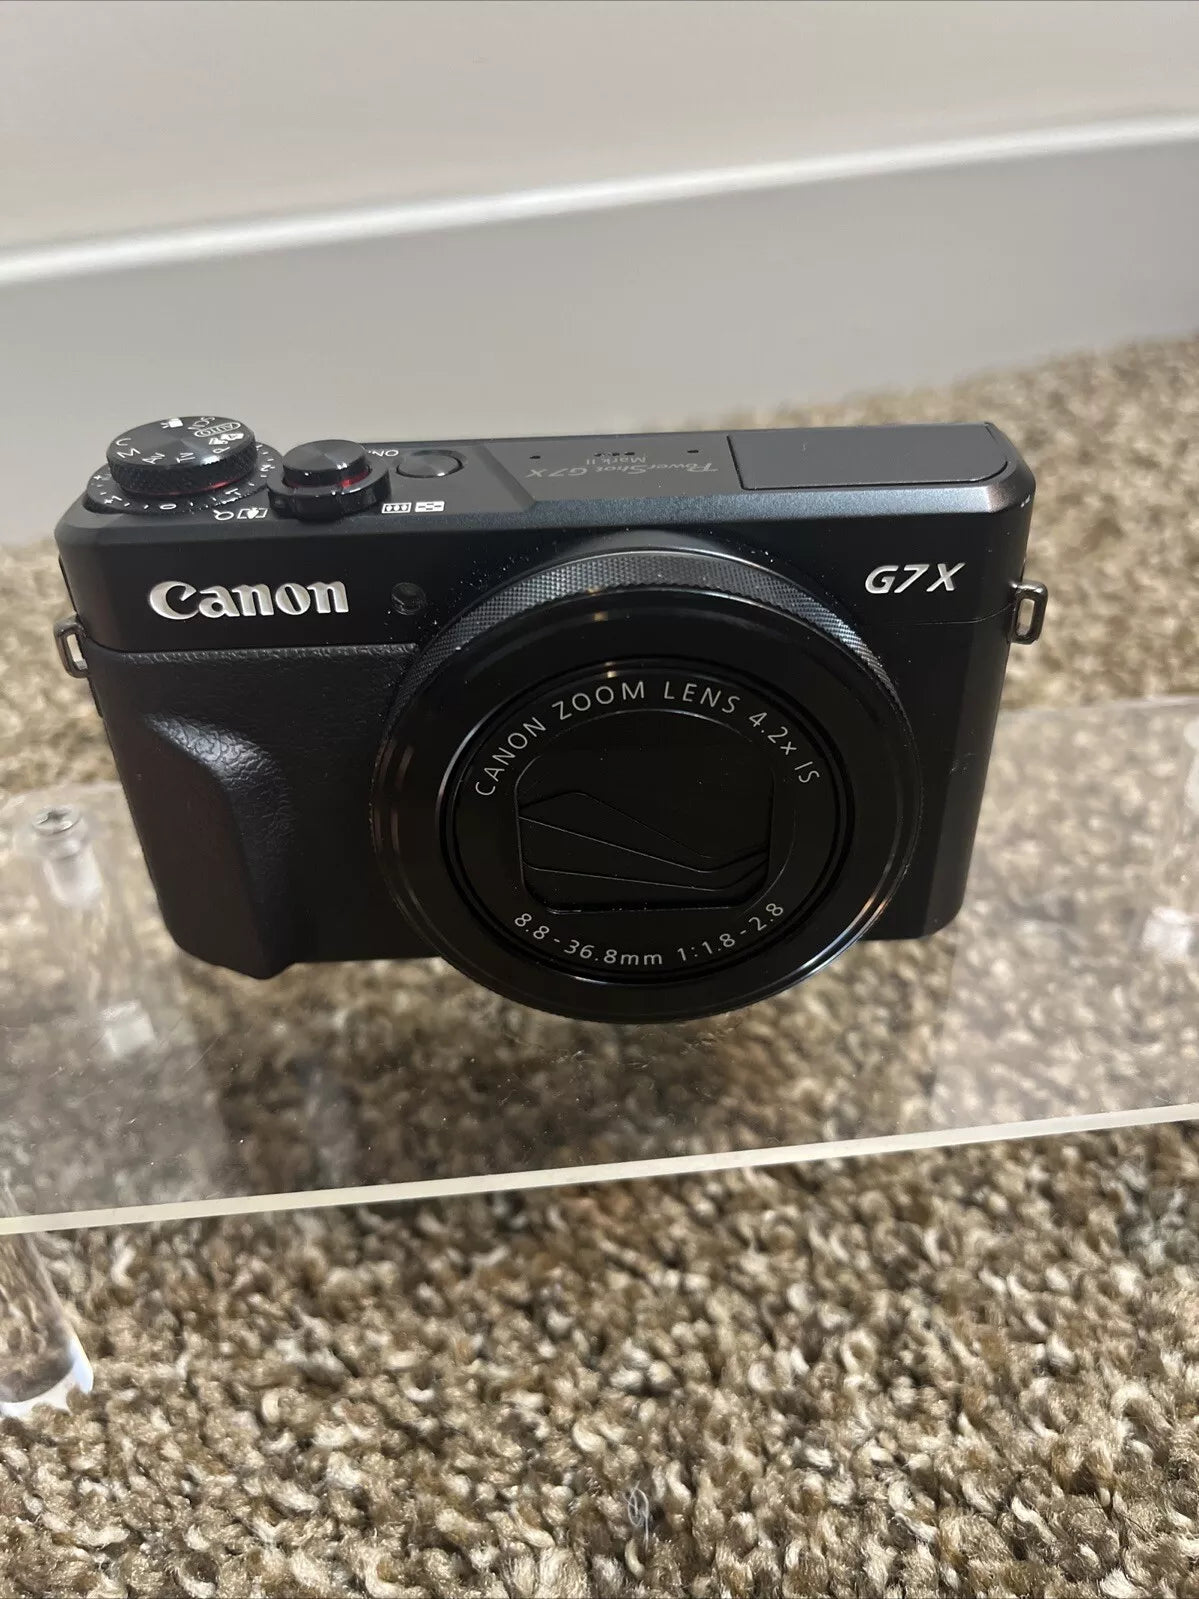 Canon PowerShot G7X Mark II 20.1 MP Compact Digital Camera - Black